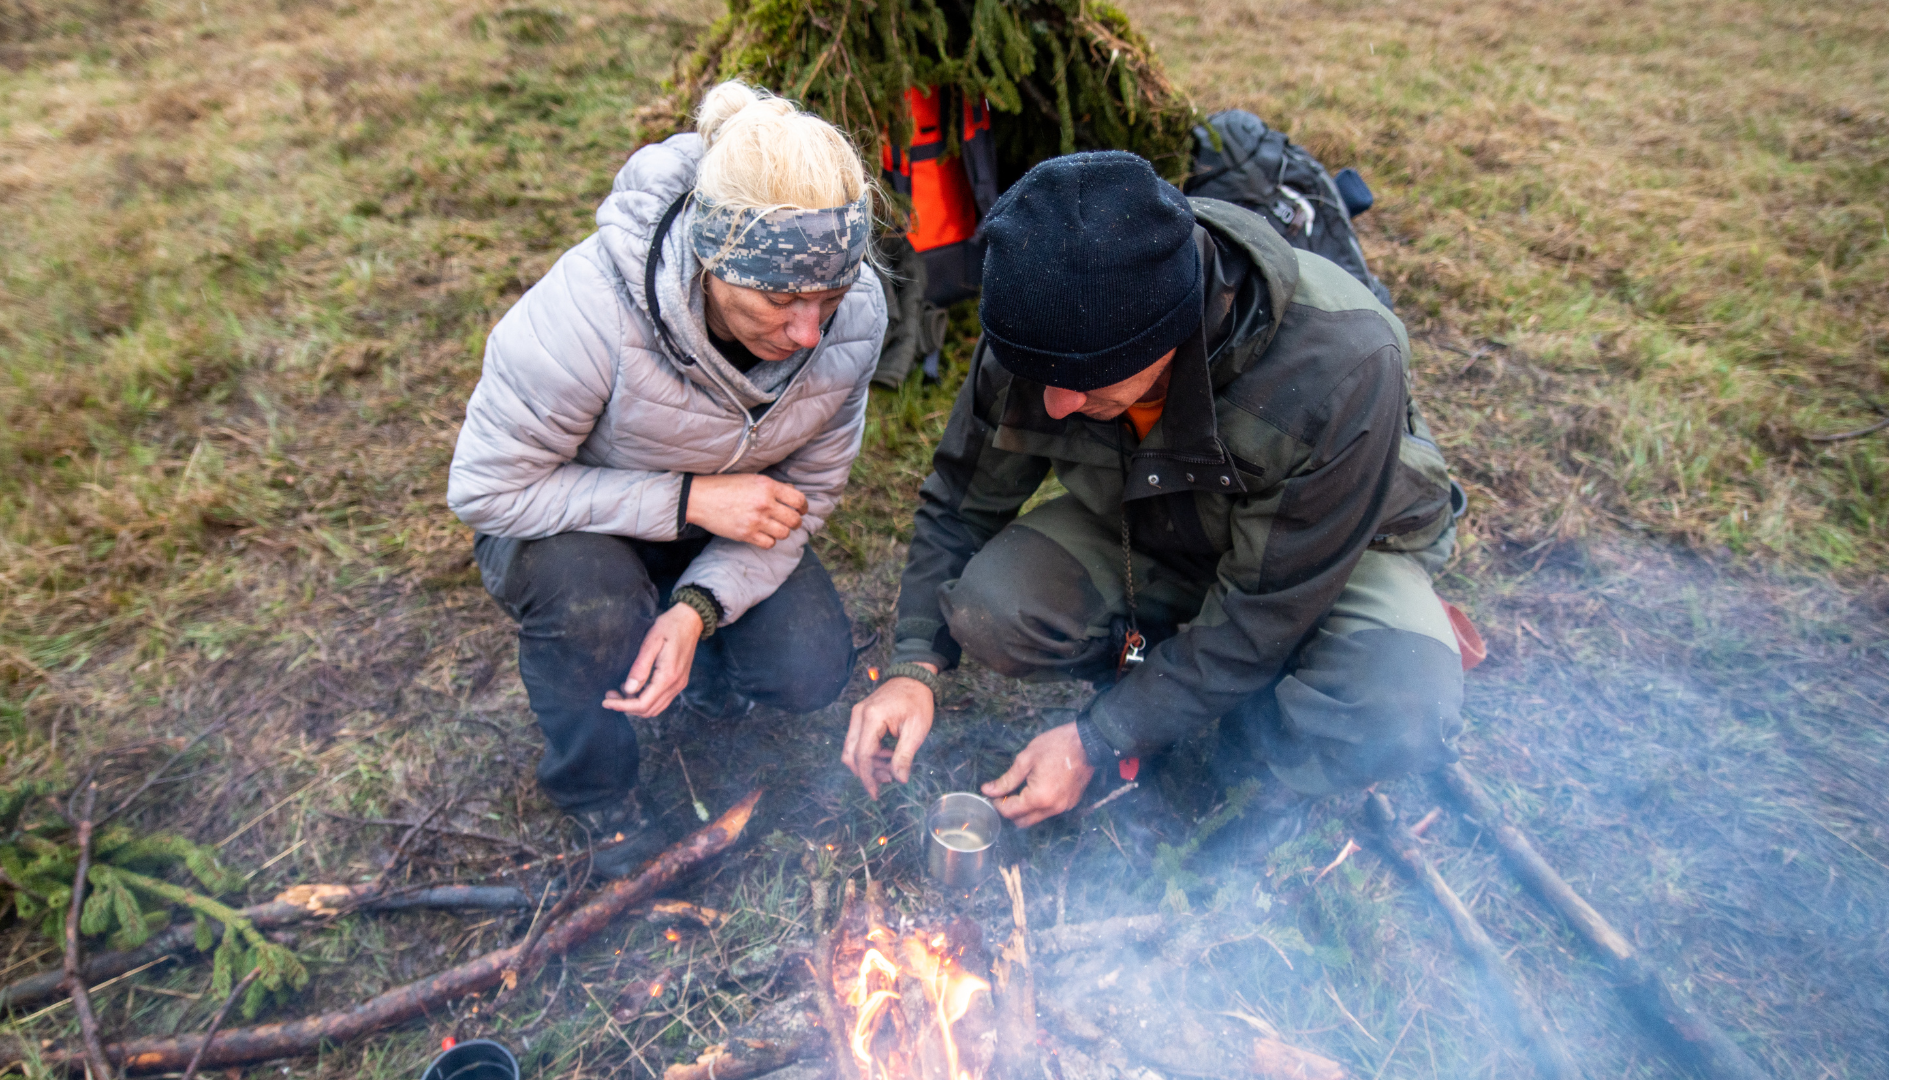 wilderness-survival-bonfire-woman-man-heating-water-using-metal-cup